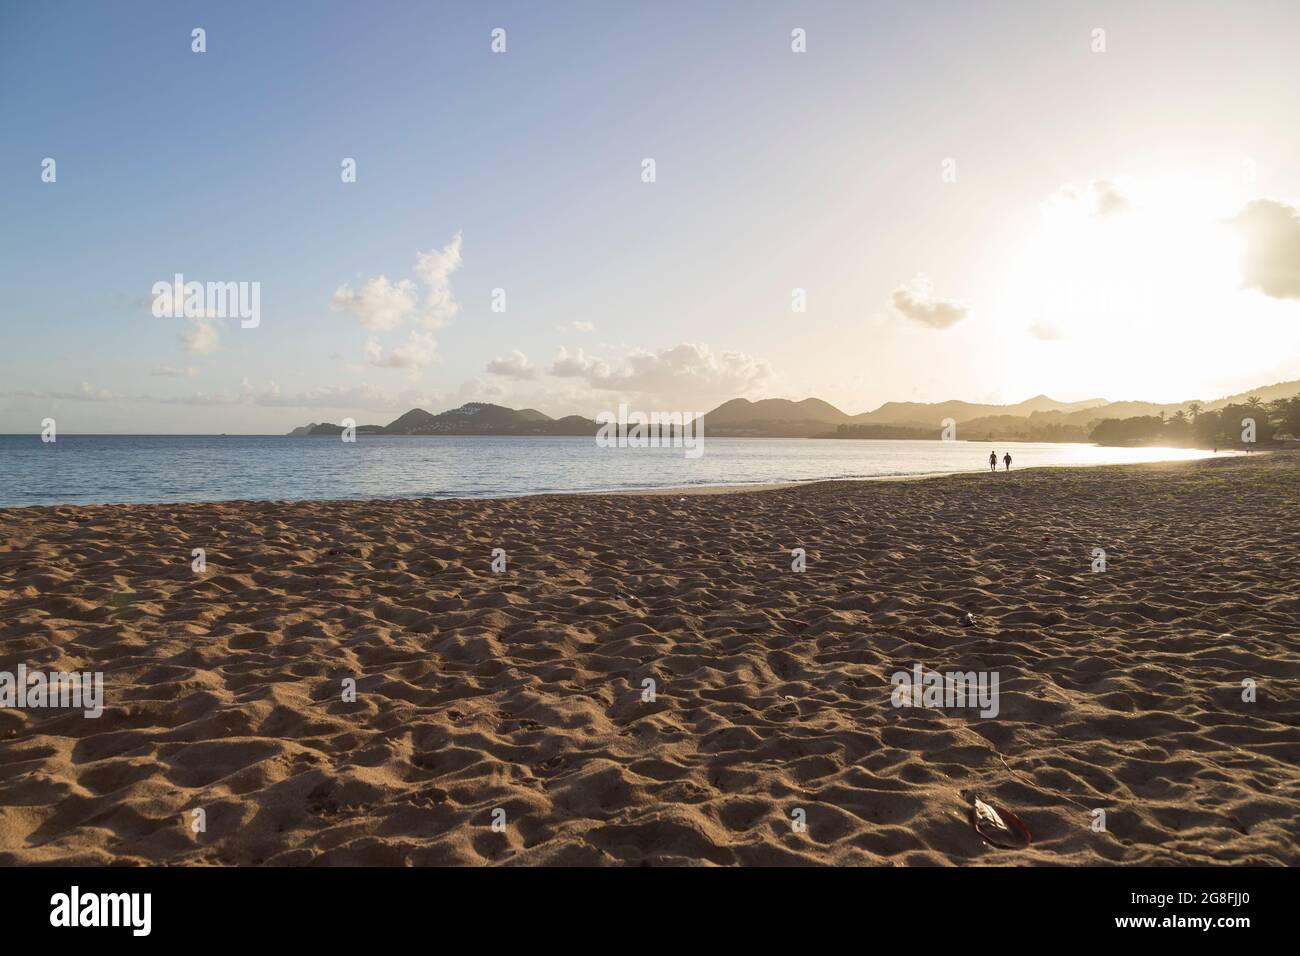 Tropical beach scenery at sunrise Stock Photo